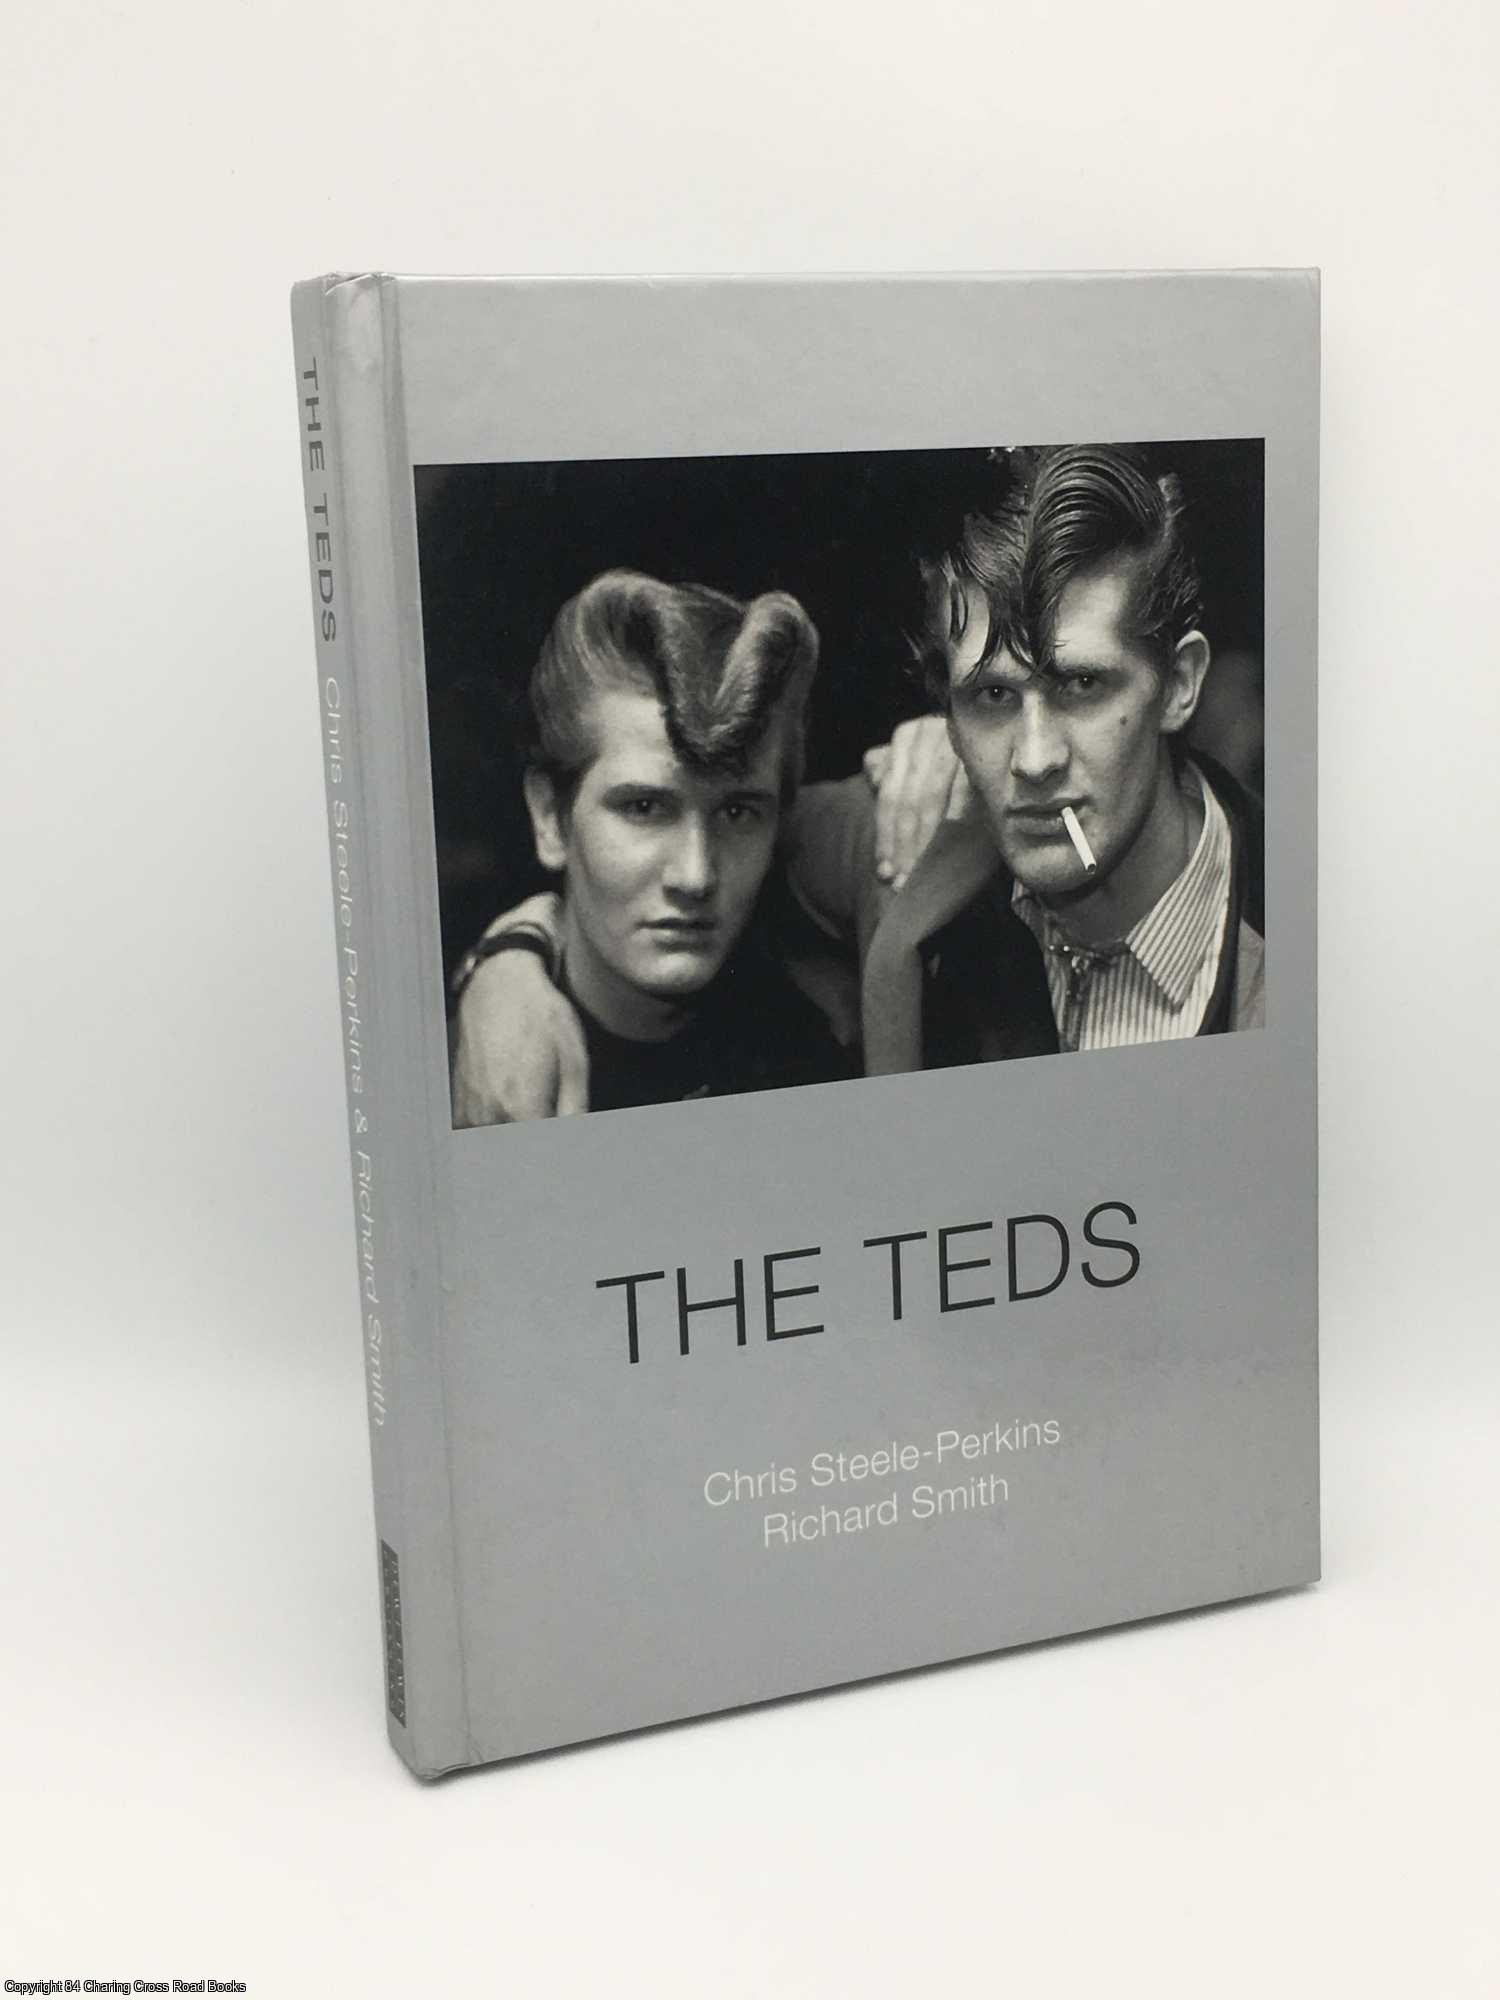 Steele-Perkins, Chris - The Teds